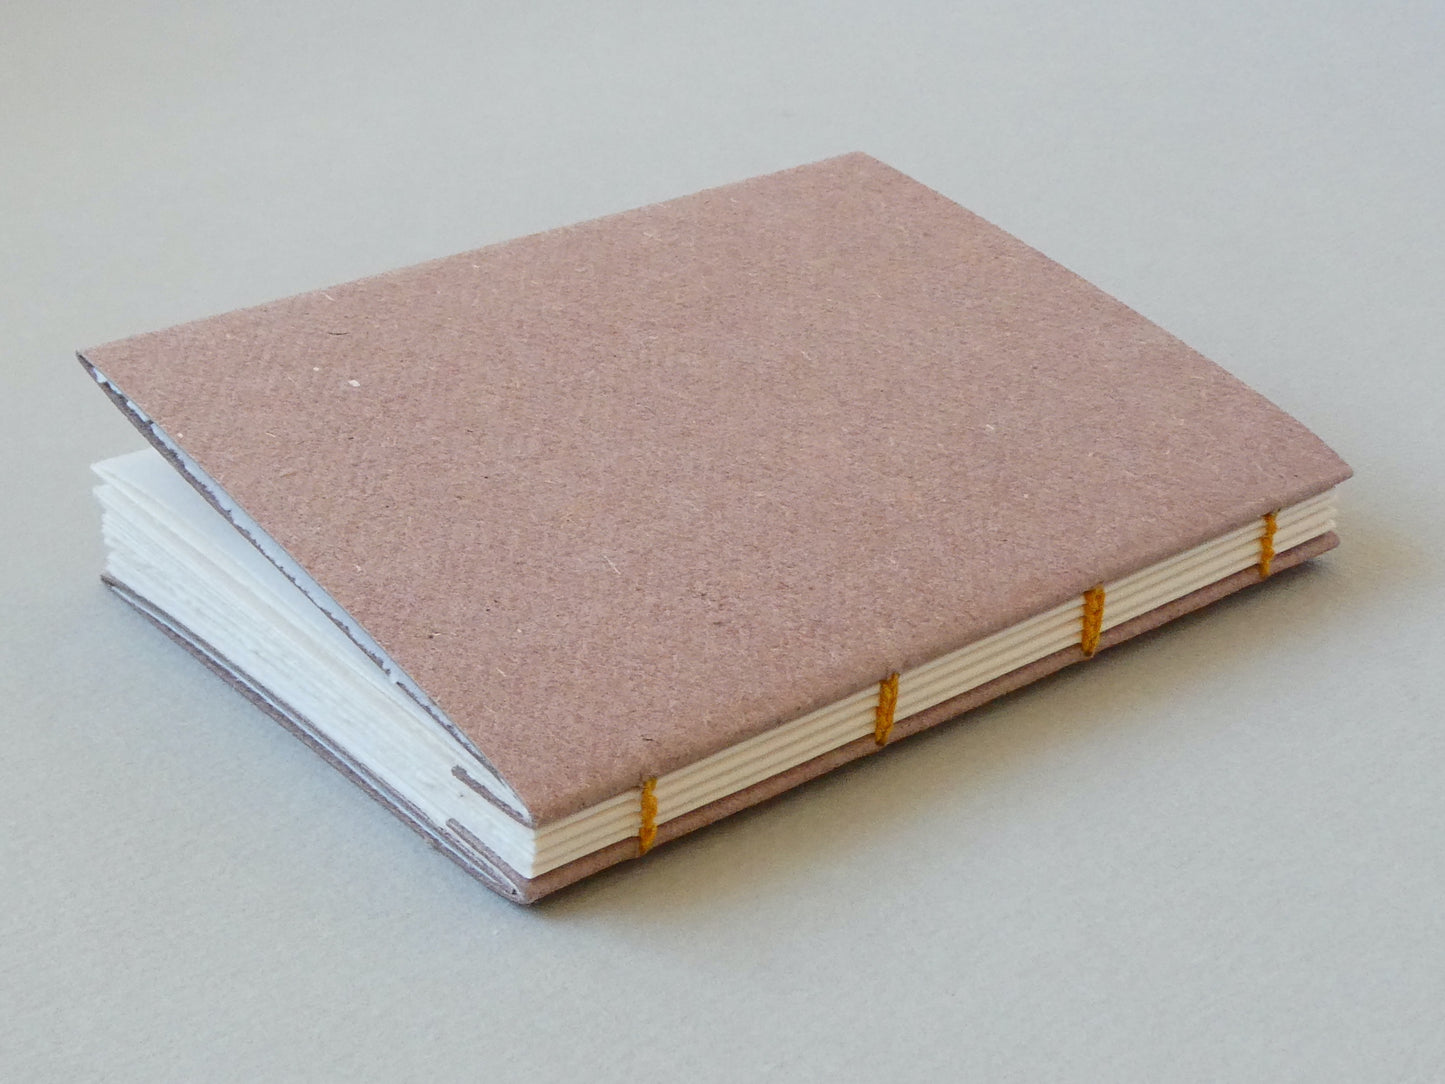 Celandine Books pink notebook back cover